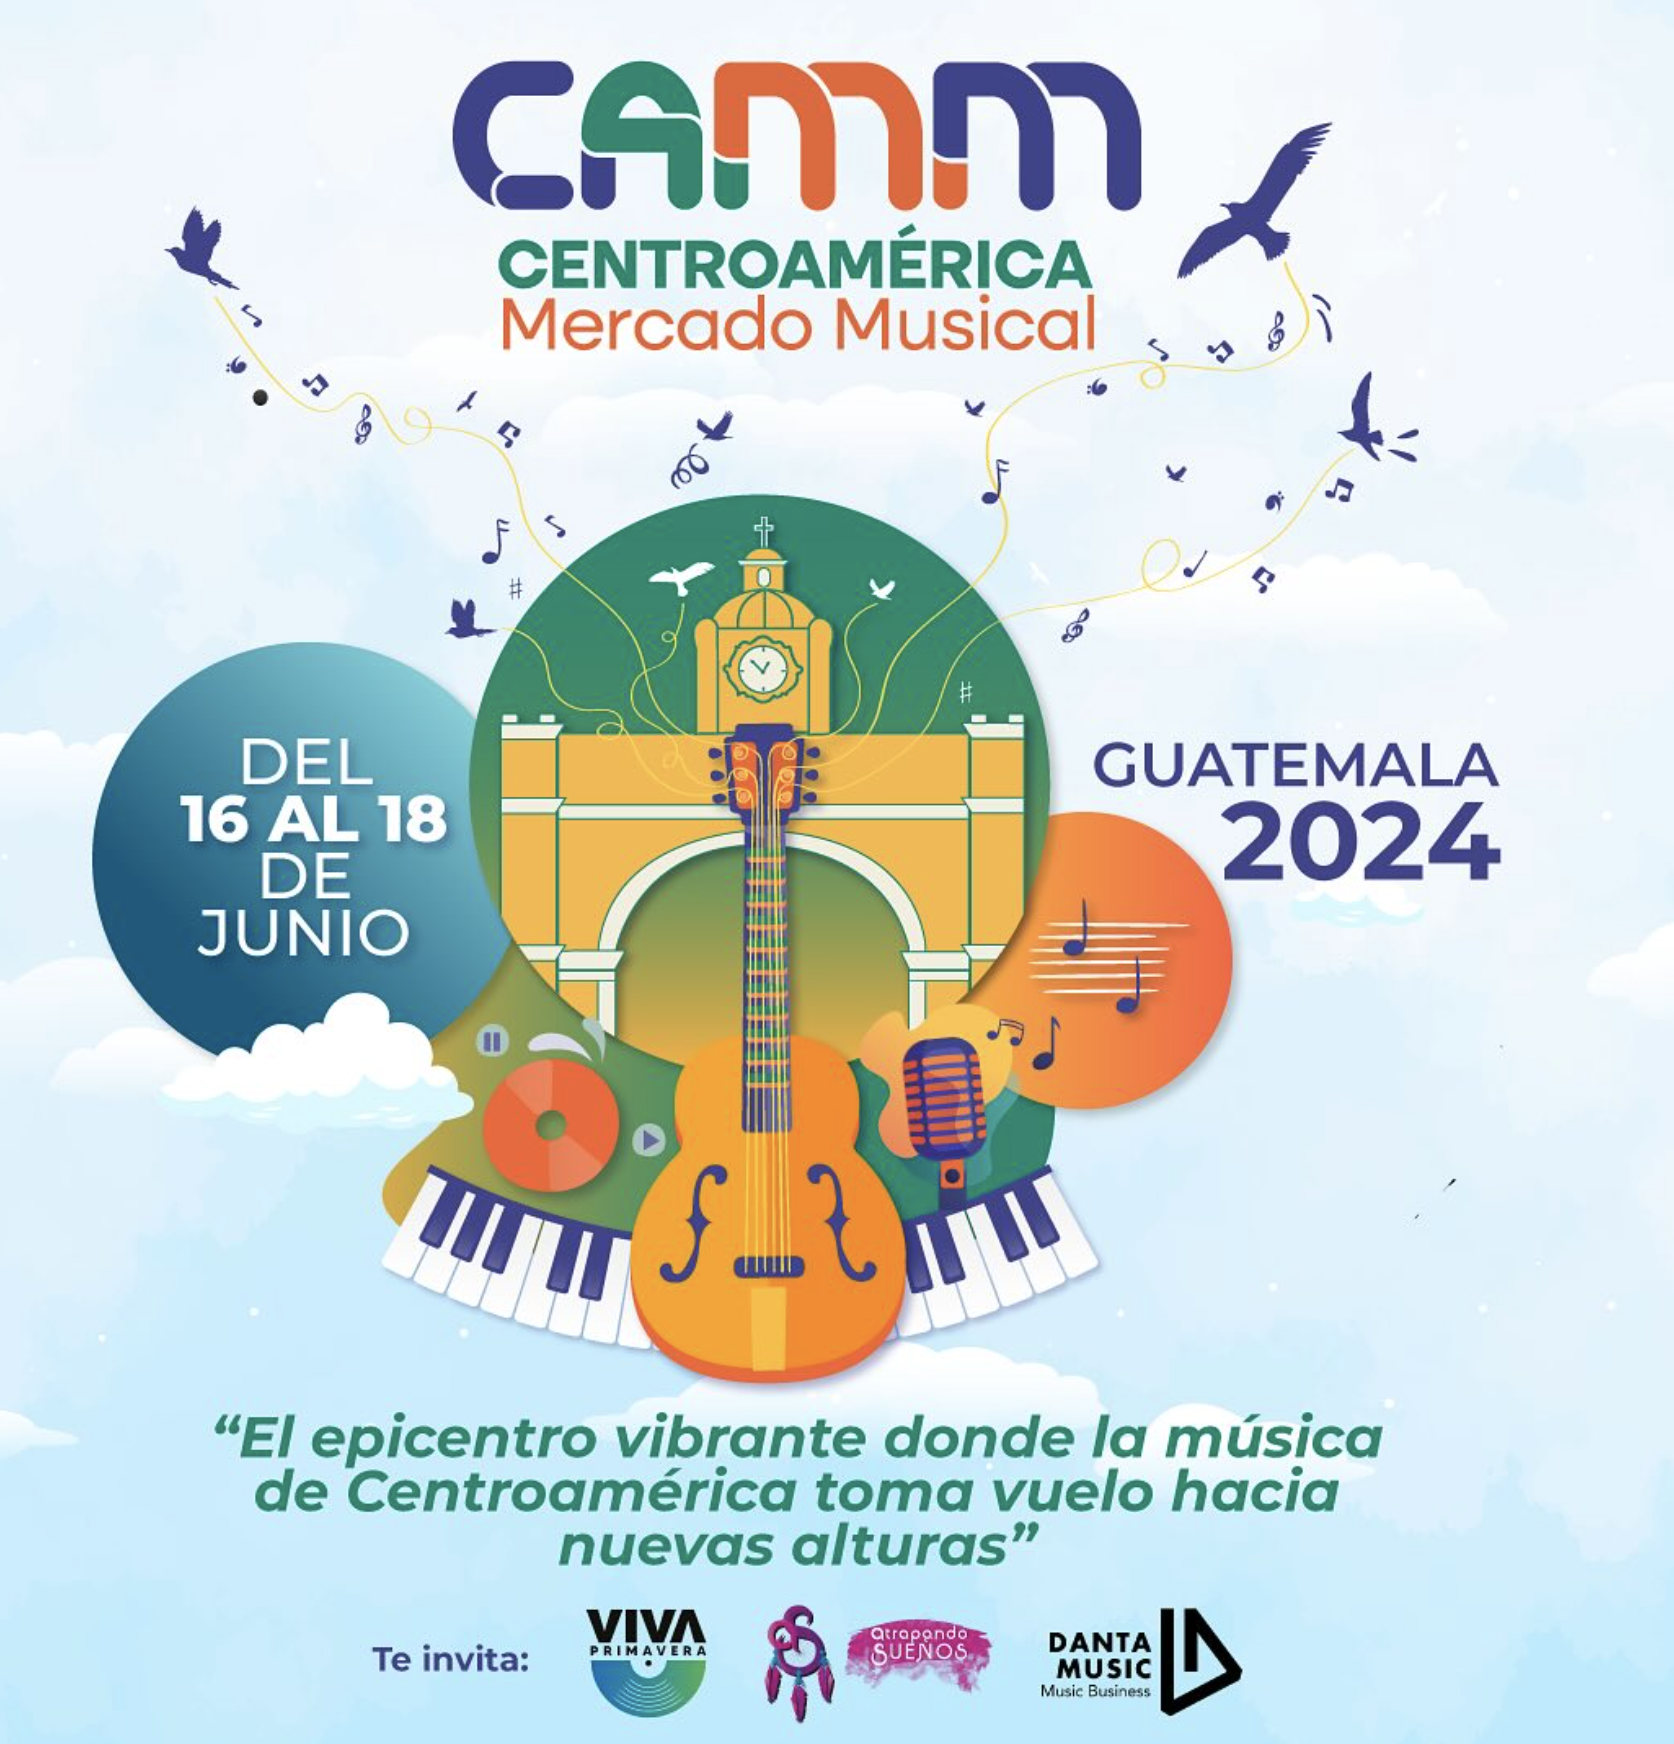 CAMM Centroamérica Mercado Musical